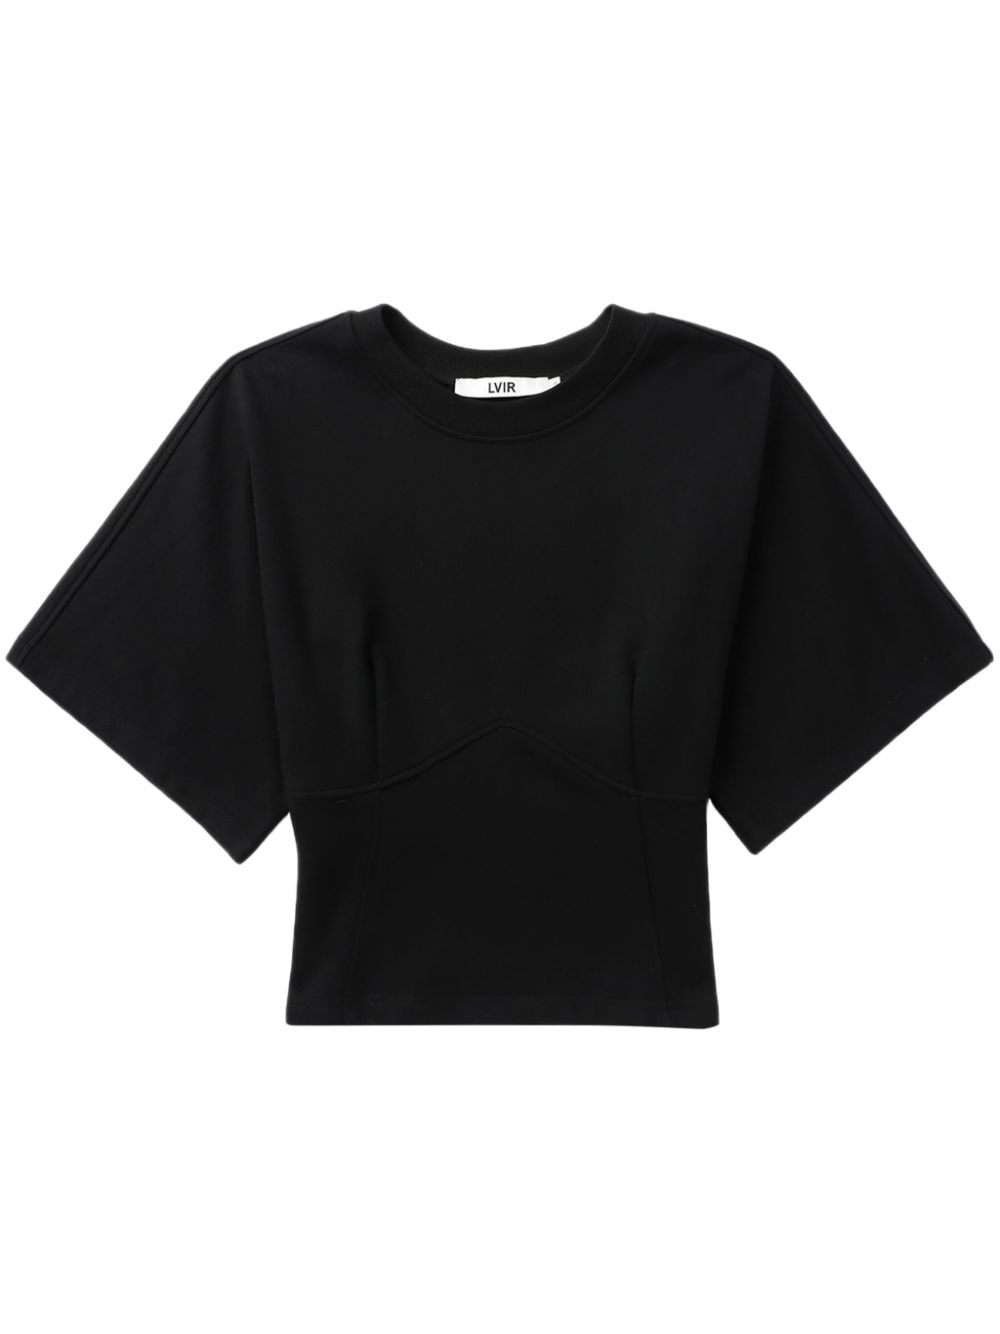 Lvir Panelled Cotton T-shirt In Black